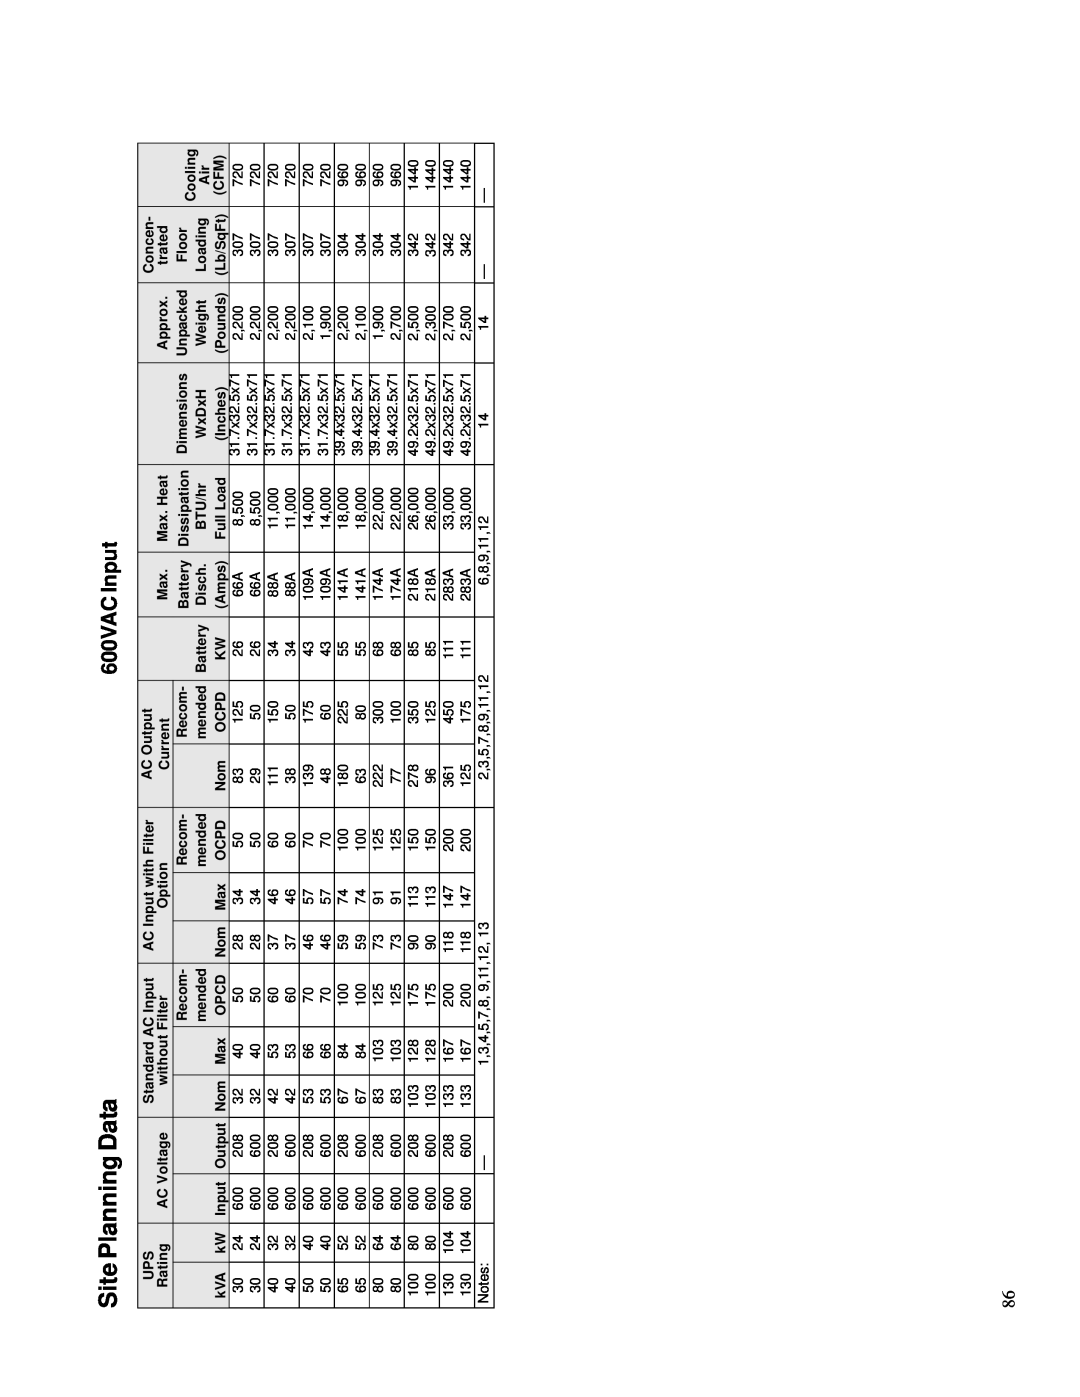 Emerson 30-130 kVA installation manual Site Planning Data, 600VAC Input 